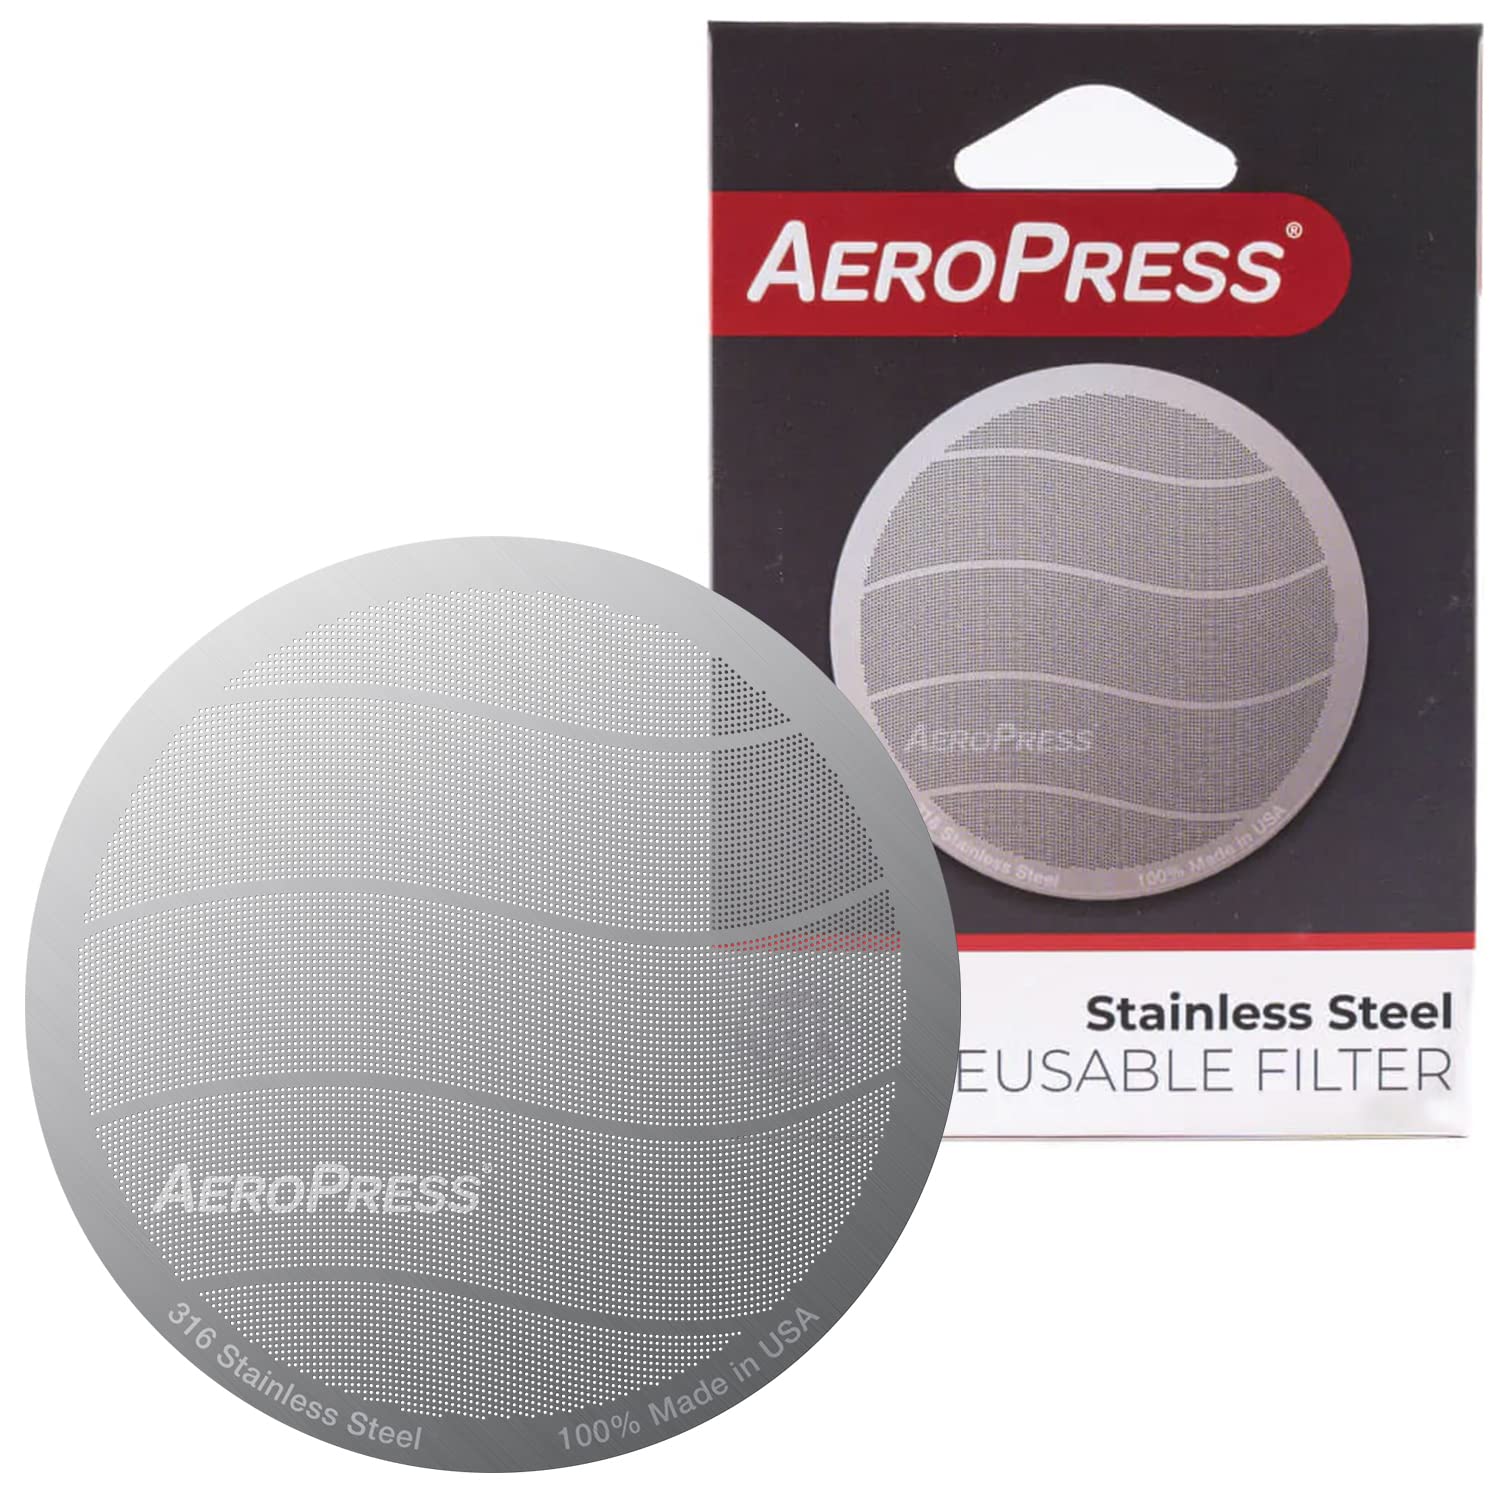 Aeropress Stainless Steel Reusable Metal Filter